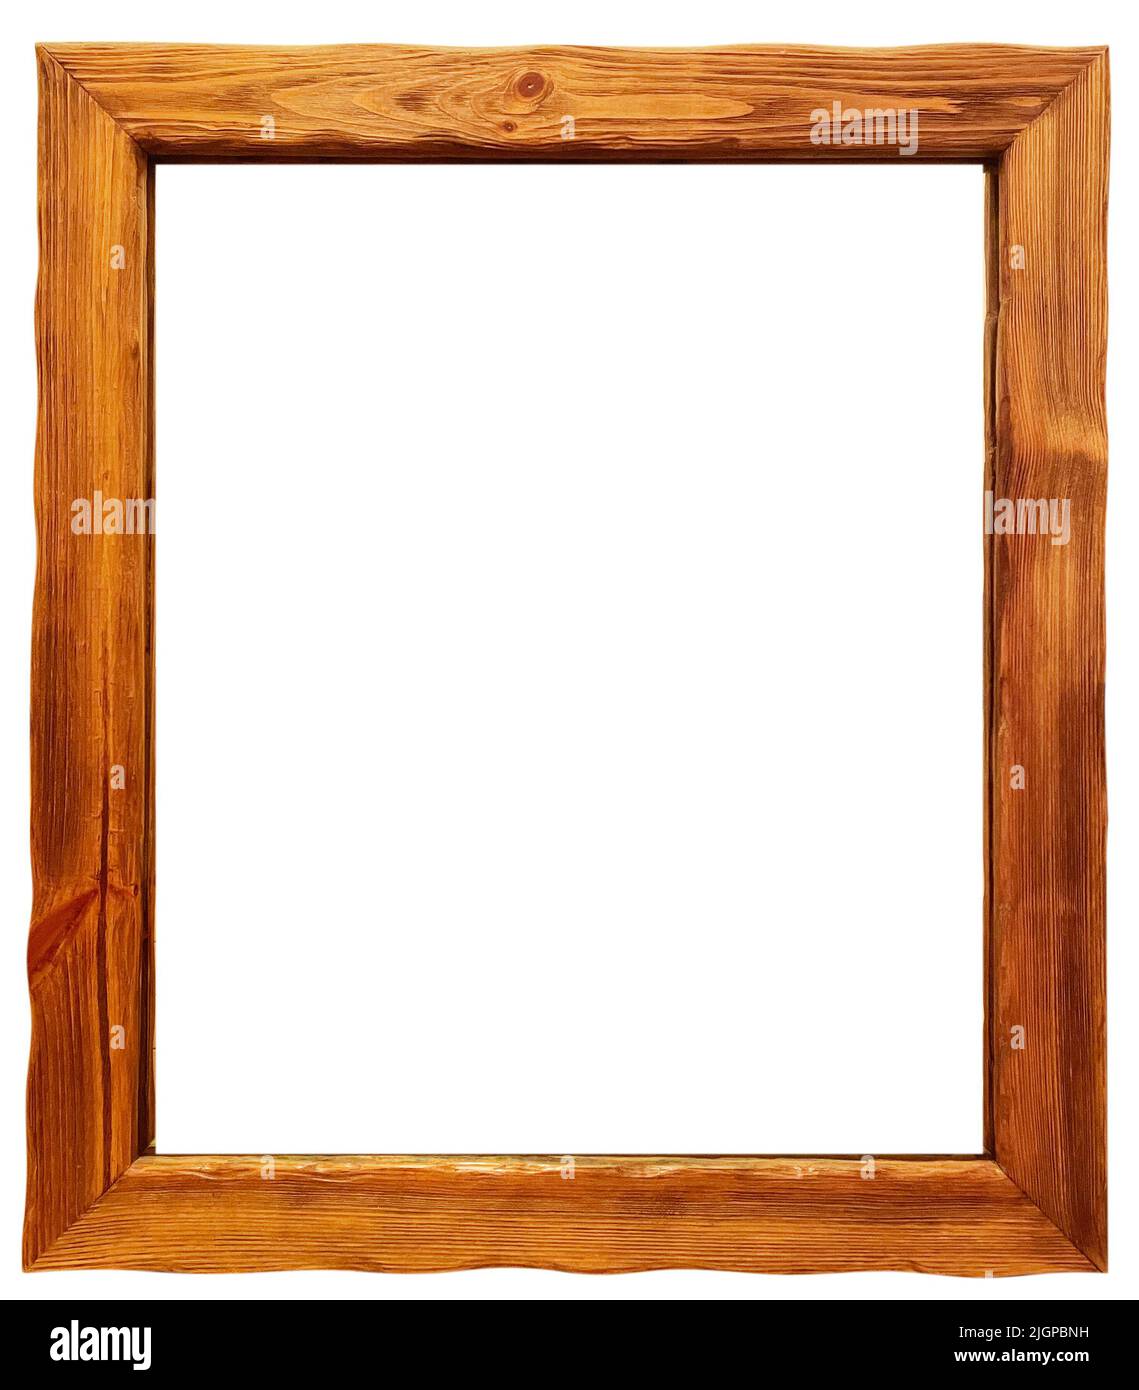 Wooden frame isolated on white background Stock Photo